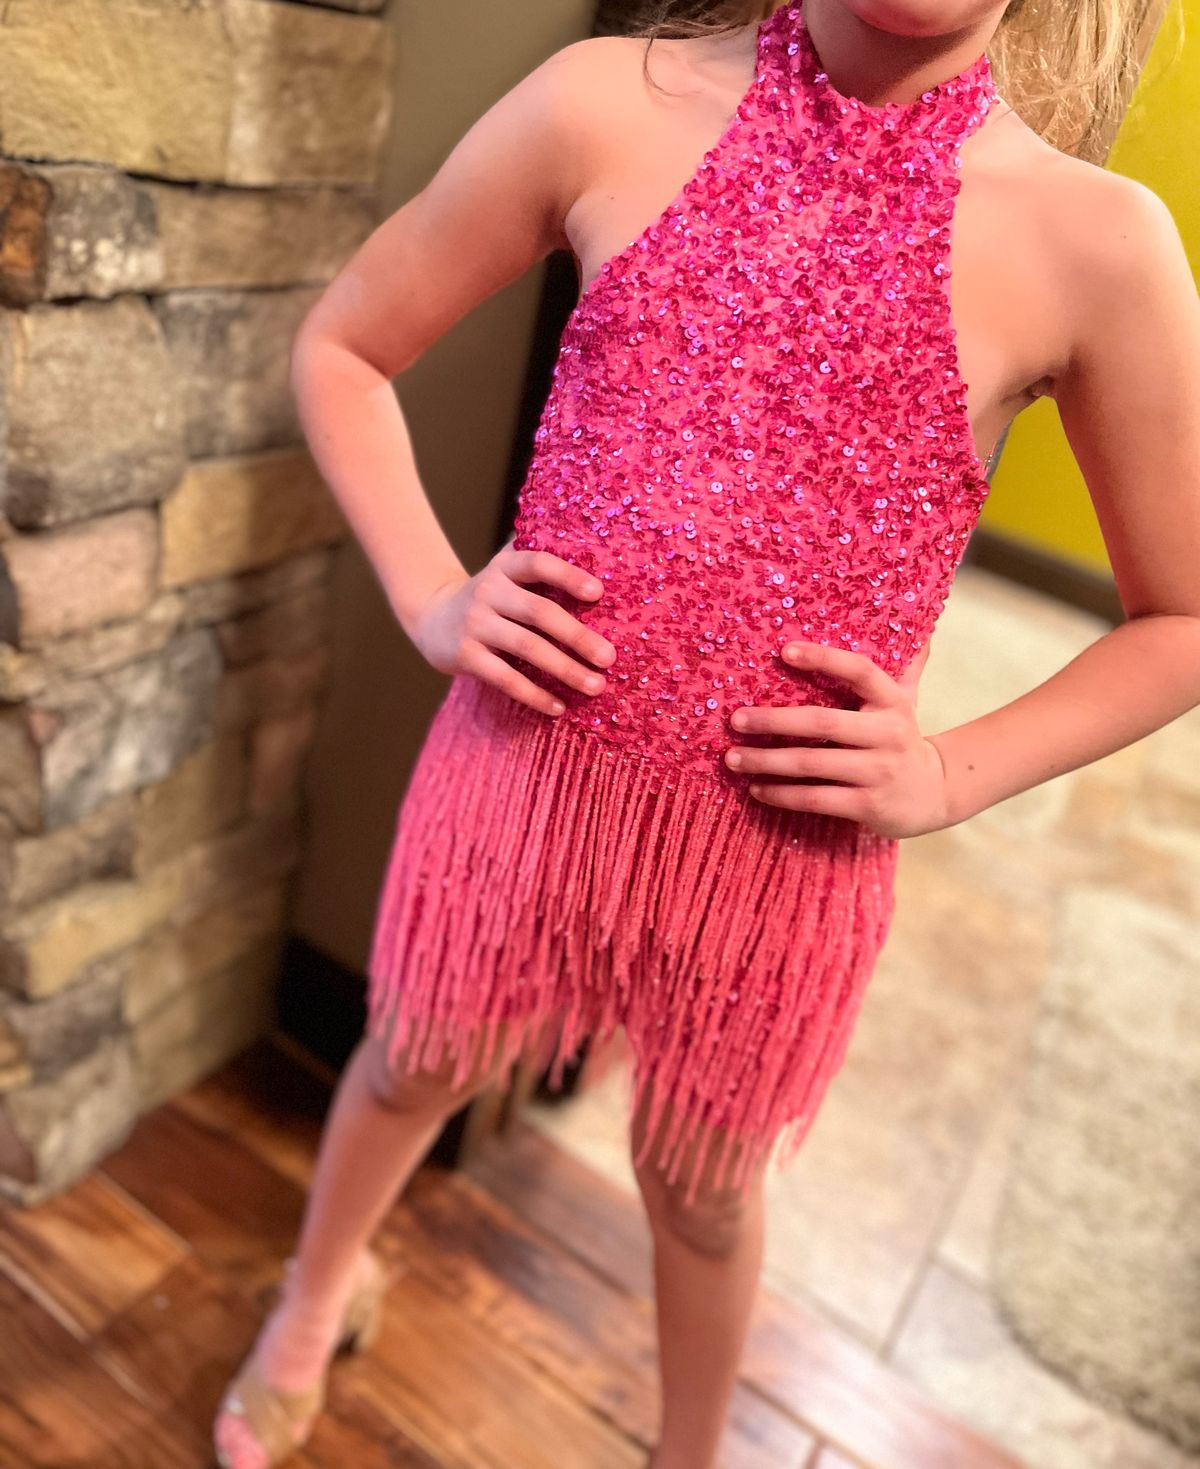 Ashley Lauren Girls Size 6 Homecoming Halter Sheer Hot Pink Formal Jumpsuit on Queenly